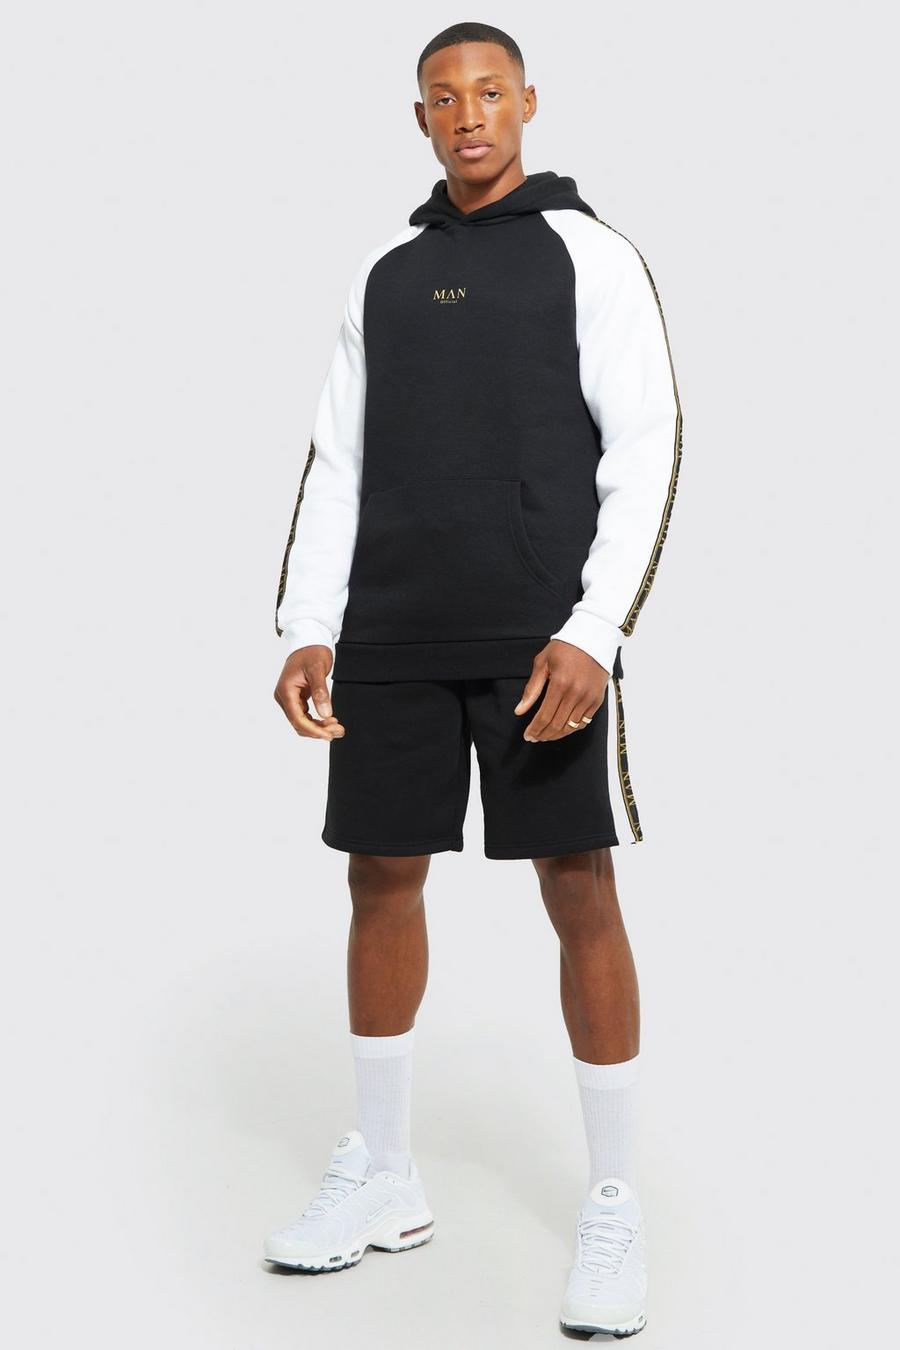 Kurzer Colorblock Trainingsanzug mit Man-Streifen, Black image number 1